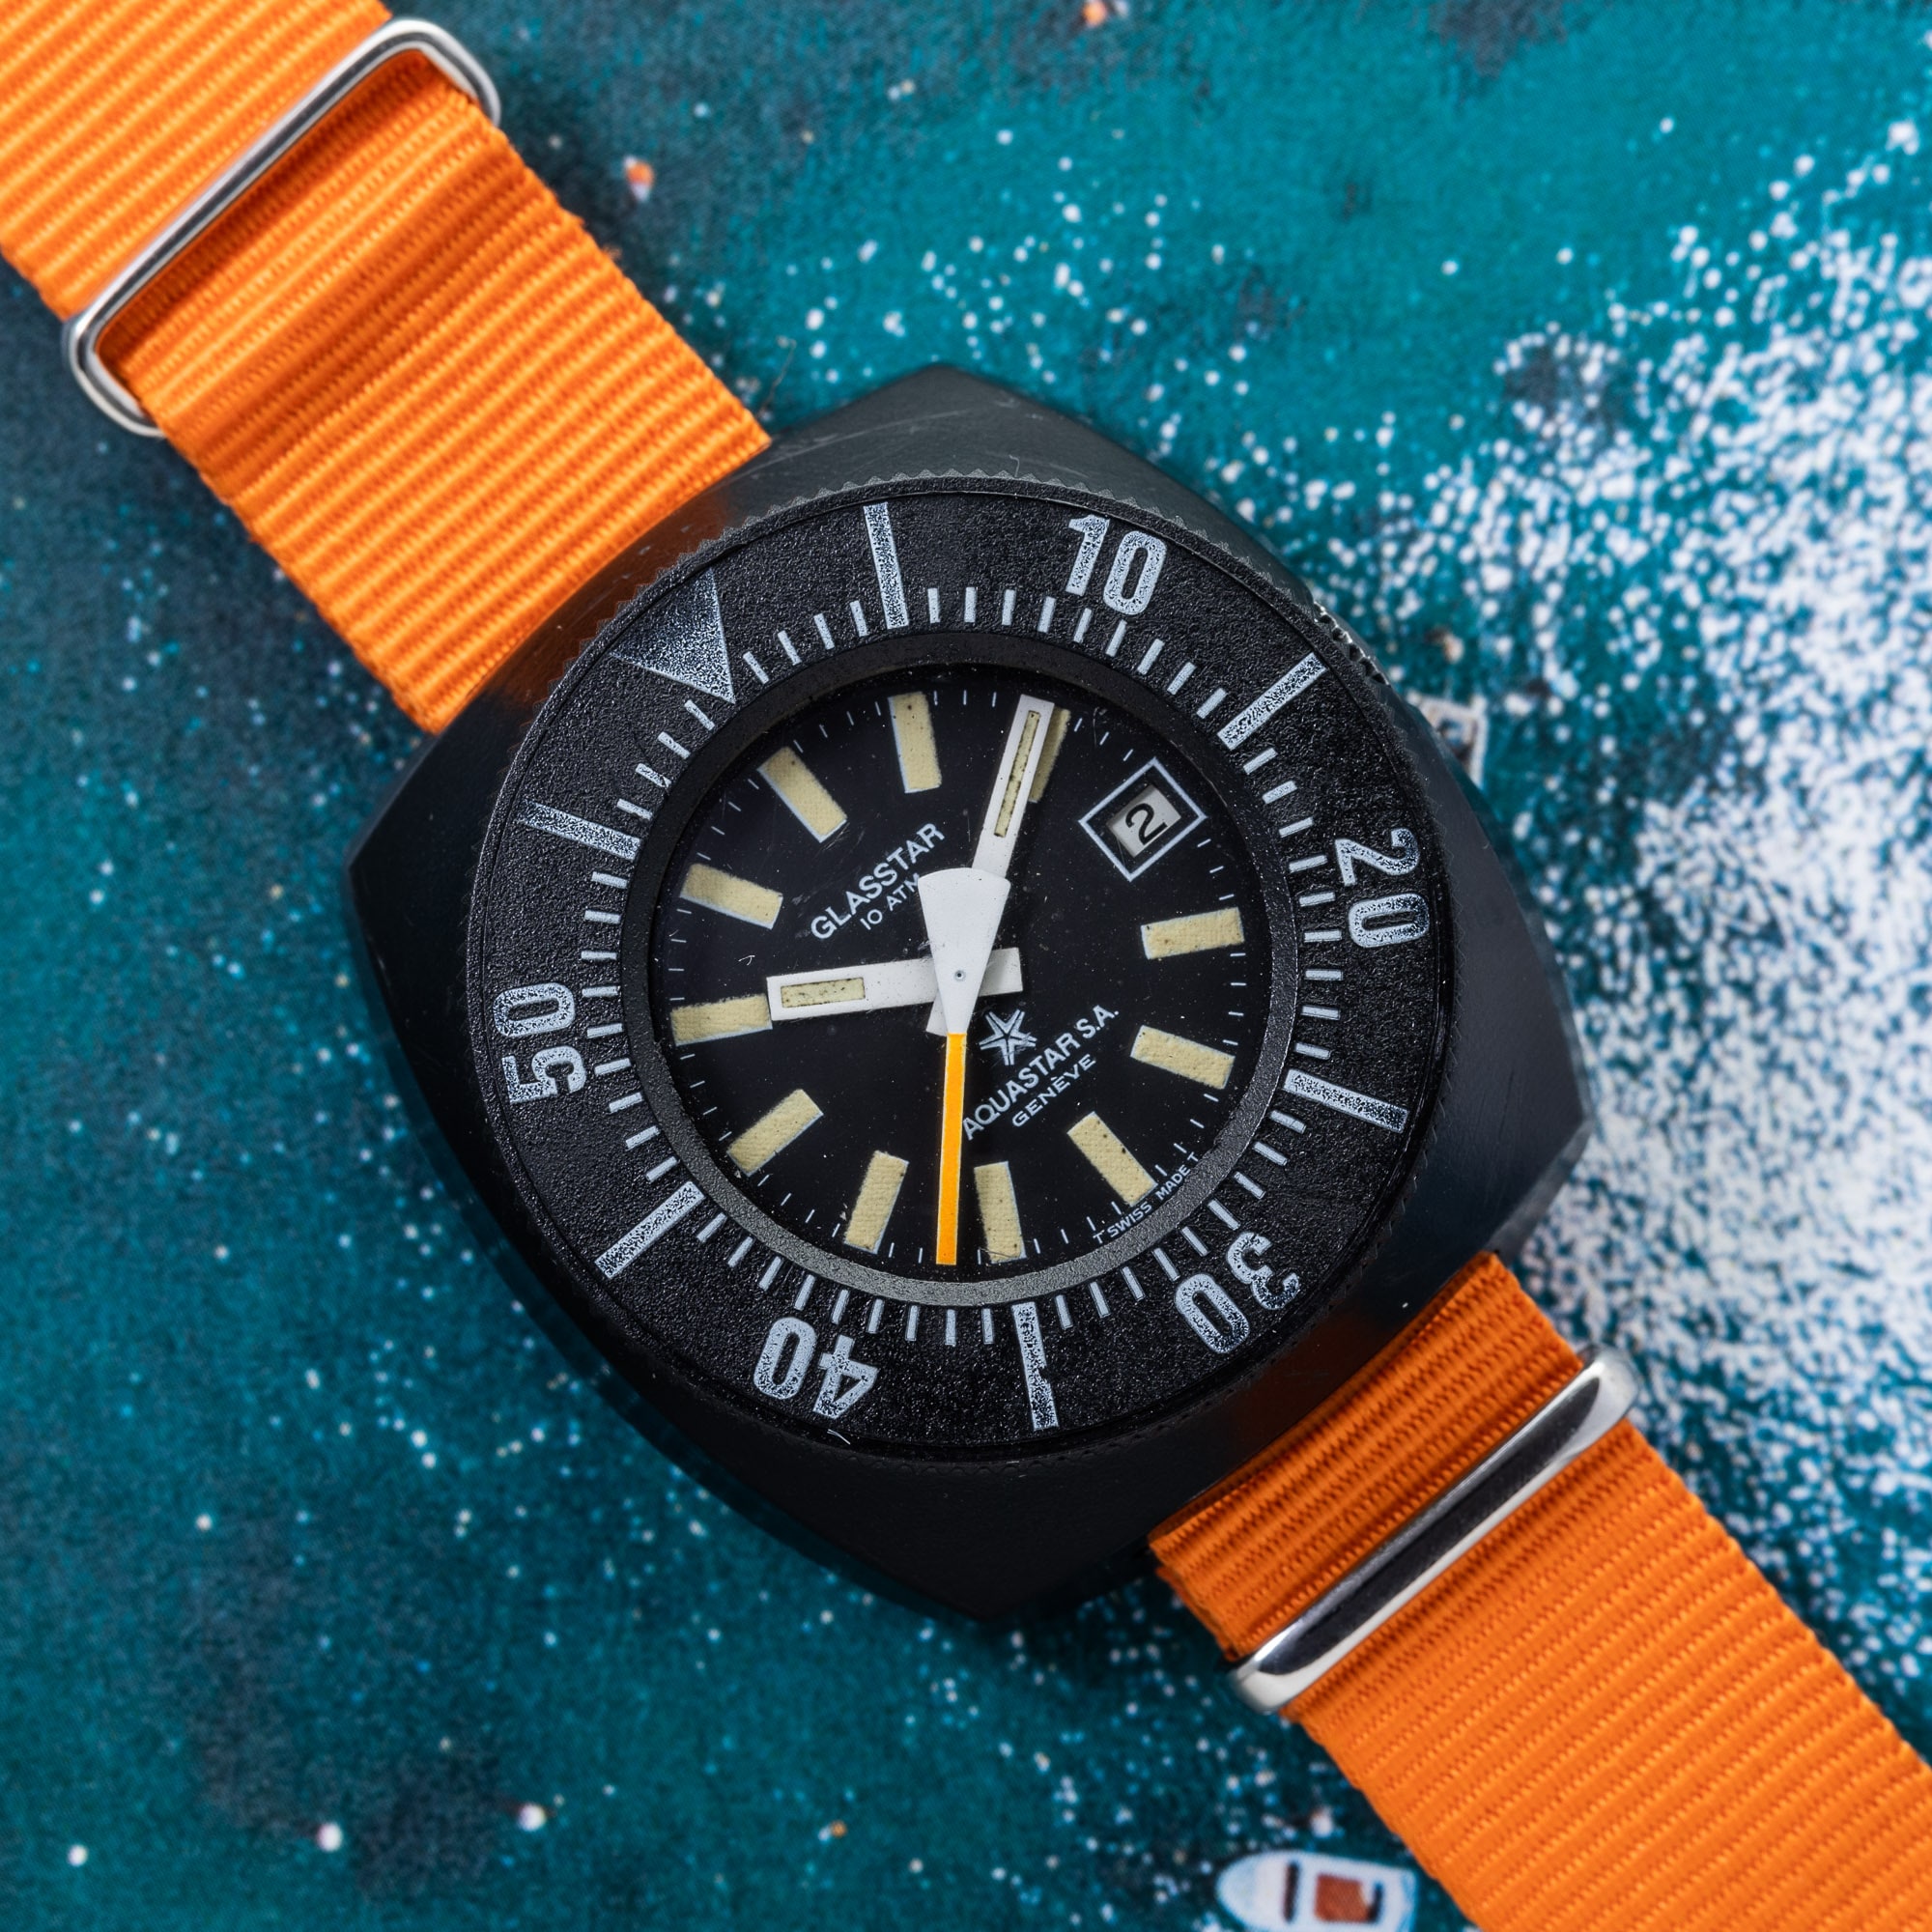 Aquastar Benthos 500 “SA” Vintage Divers Watch - The Chrono Duo - Vintage  watch sales